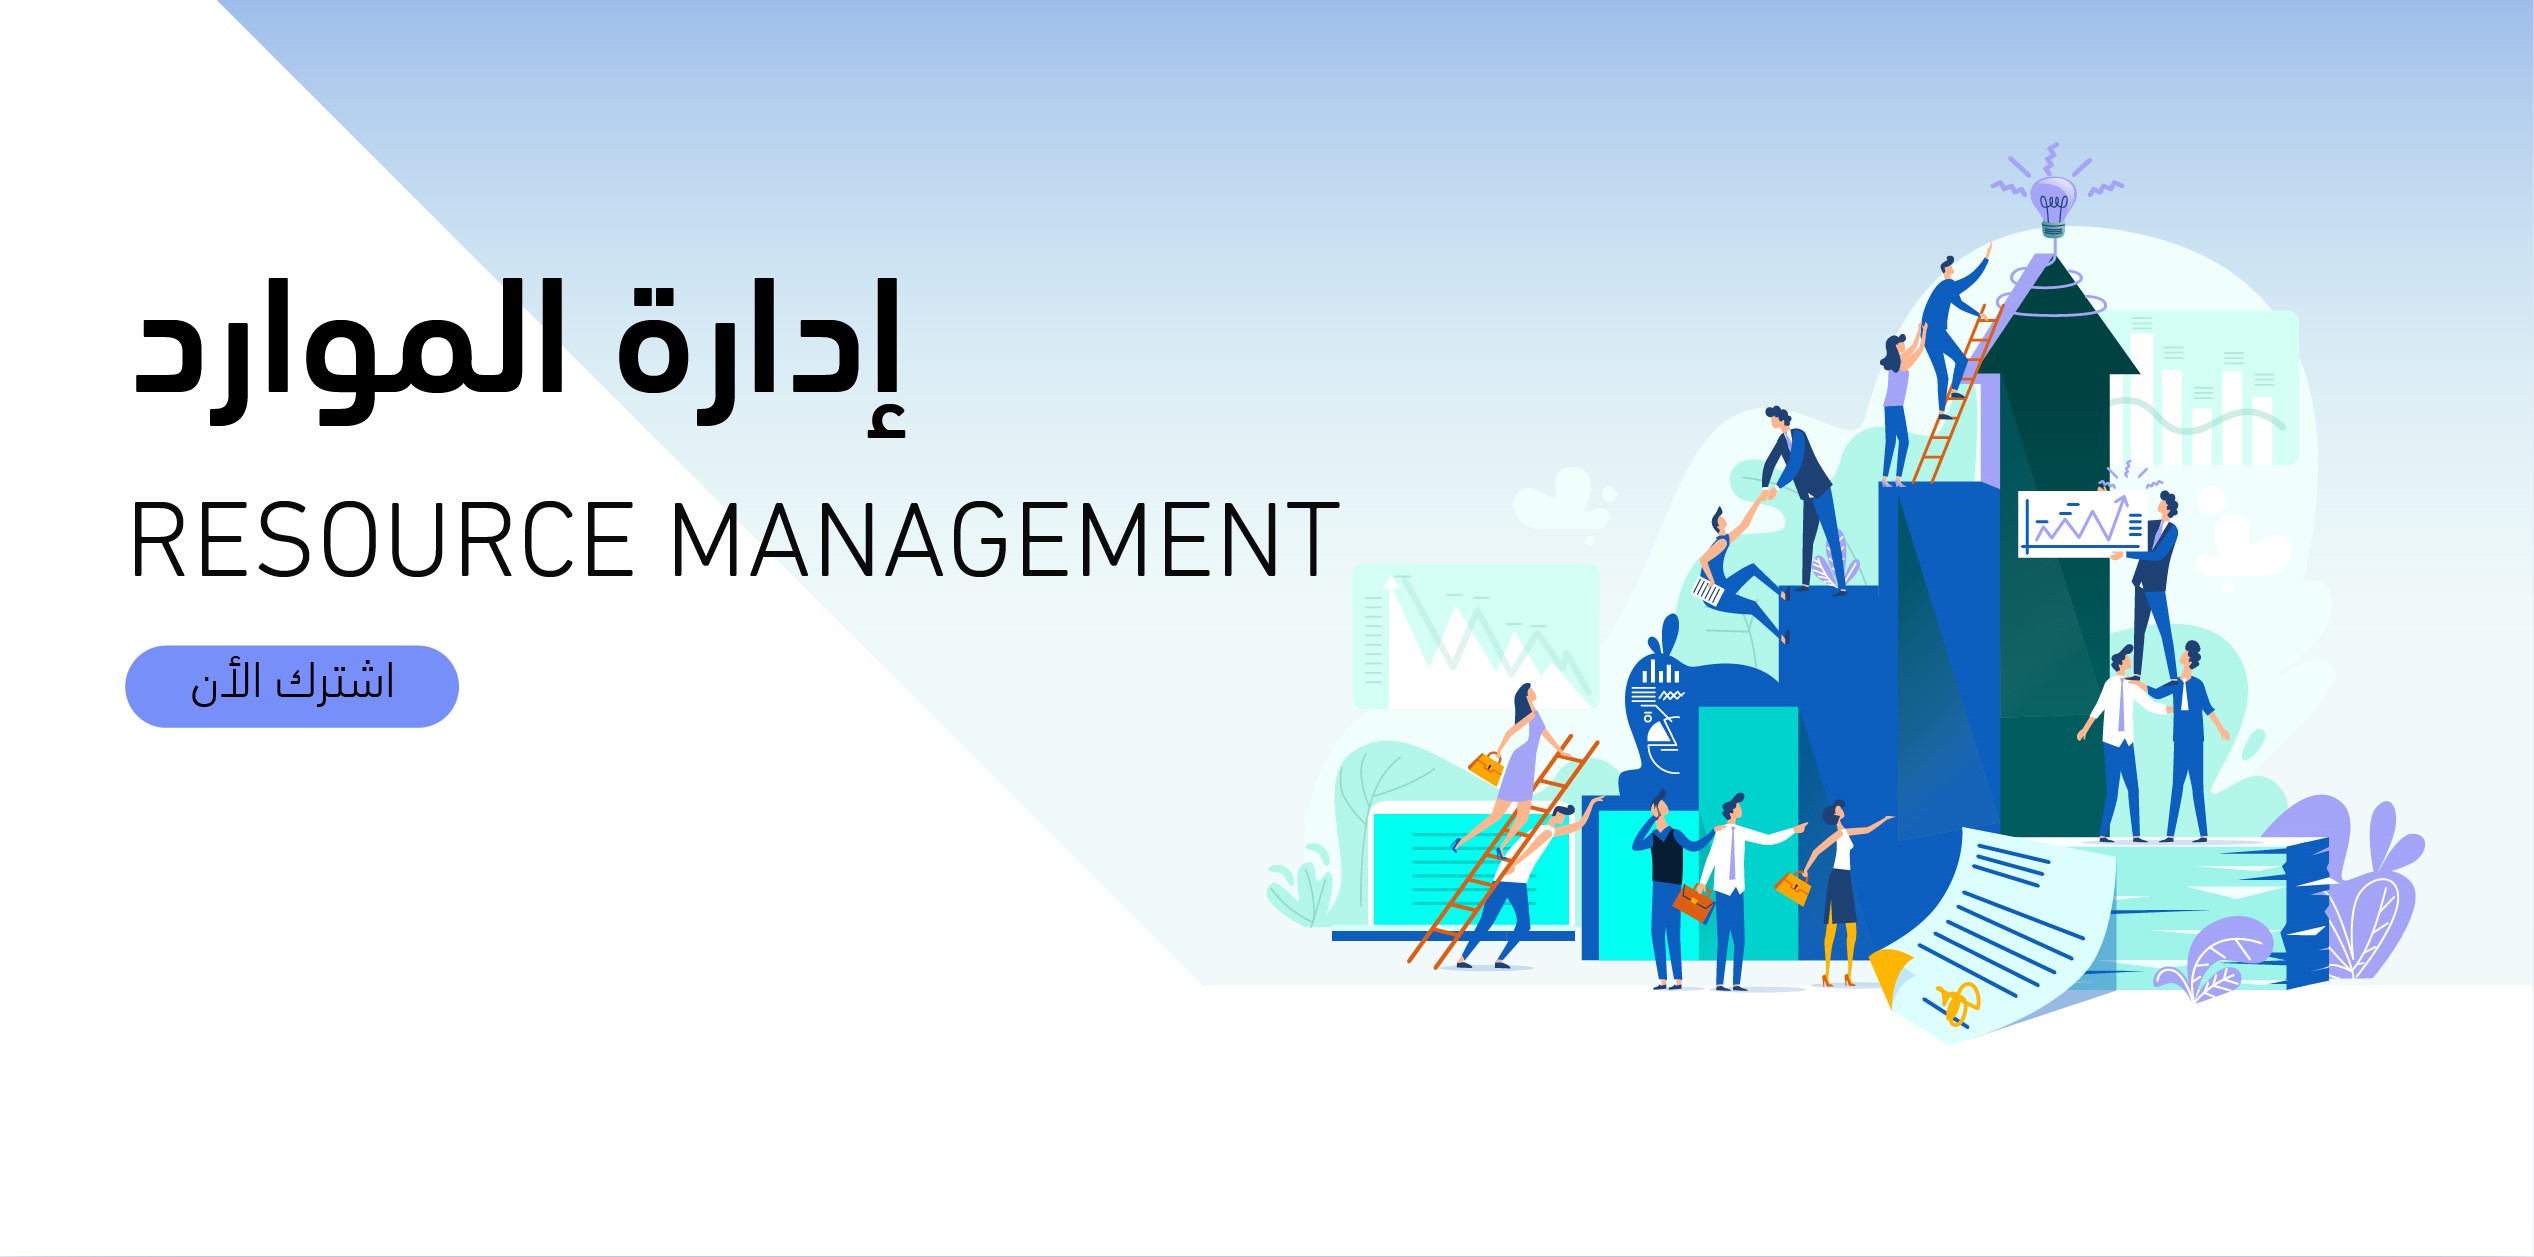 Resource Management Resource Management